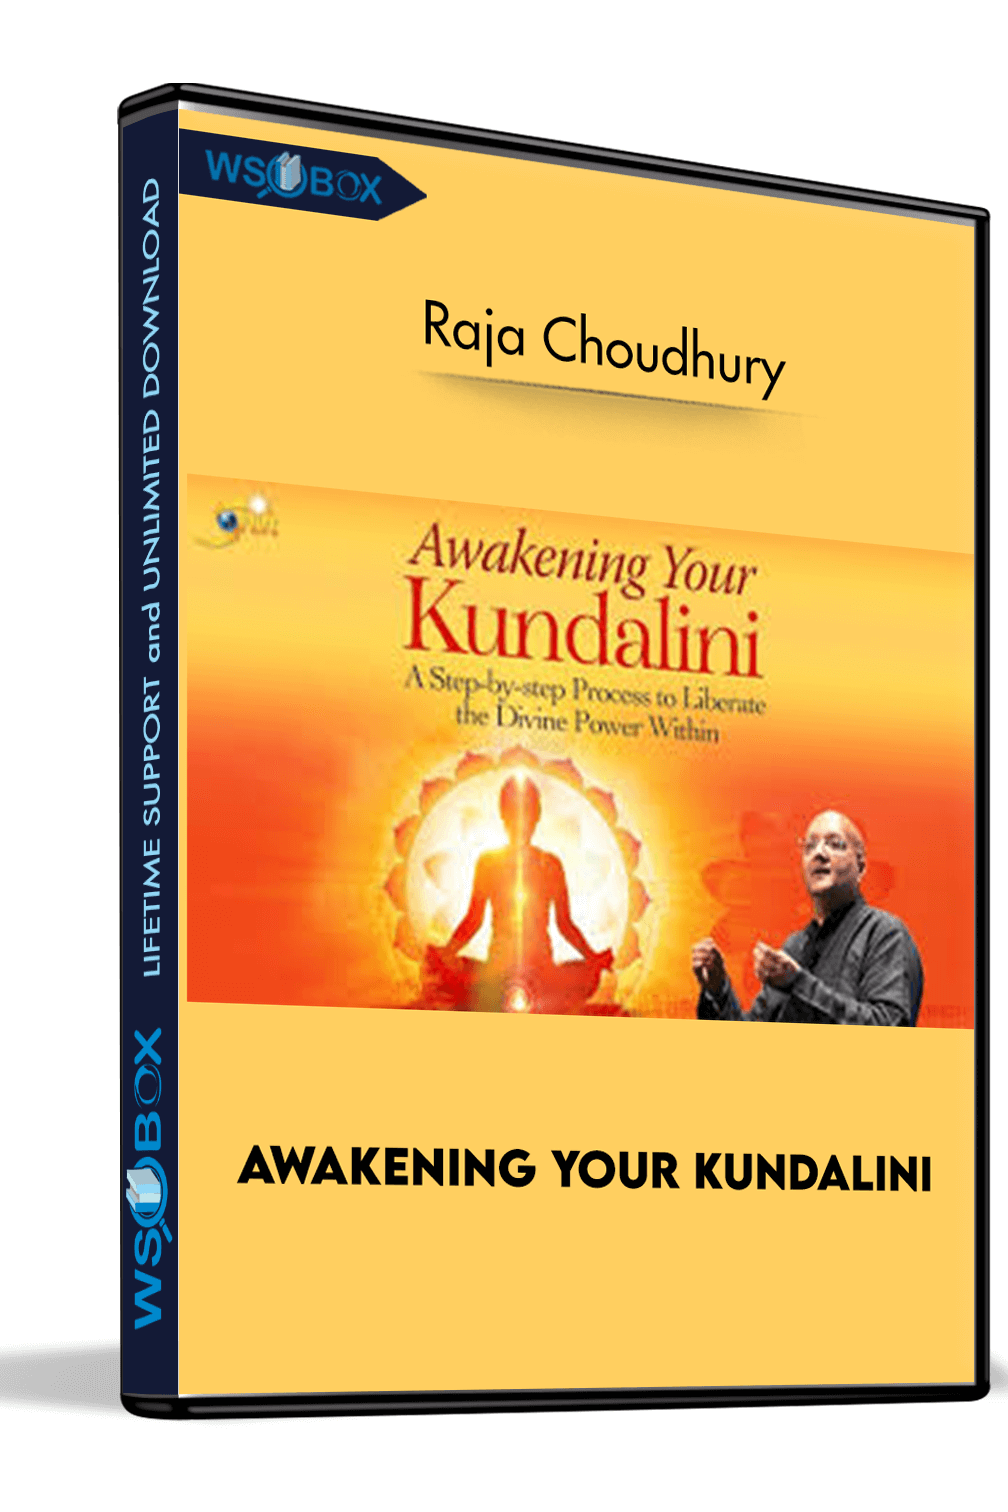 Awakening Your Kundalini – Raja Choudhury